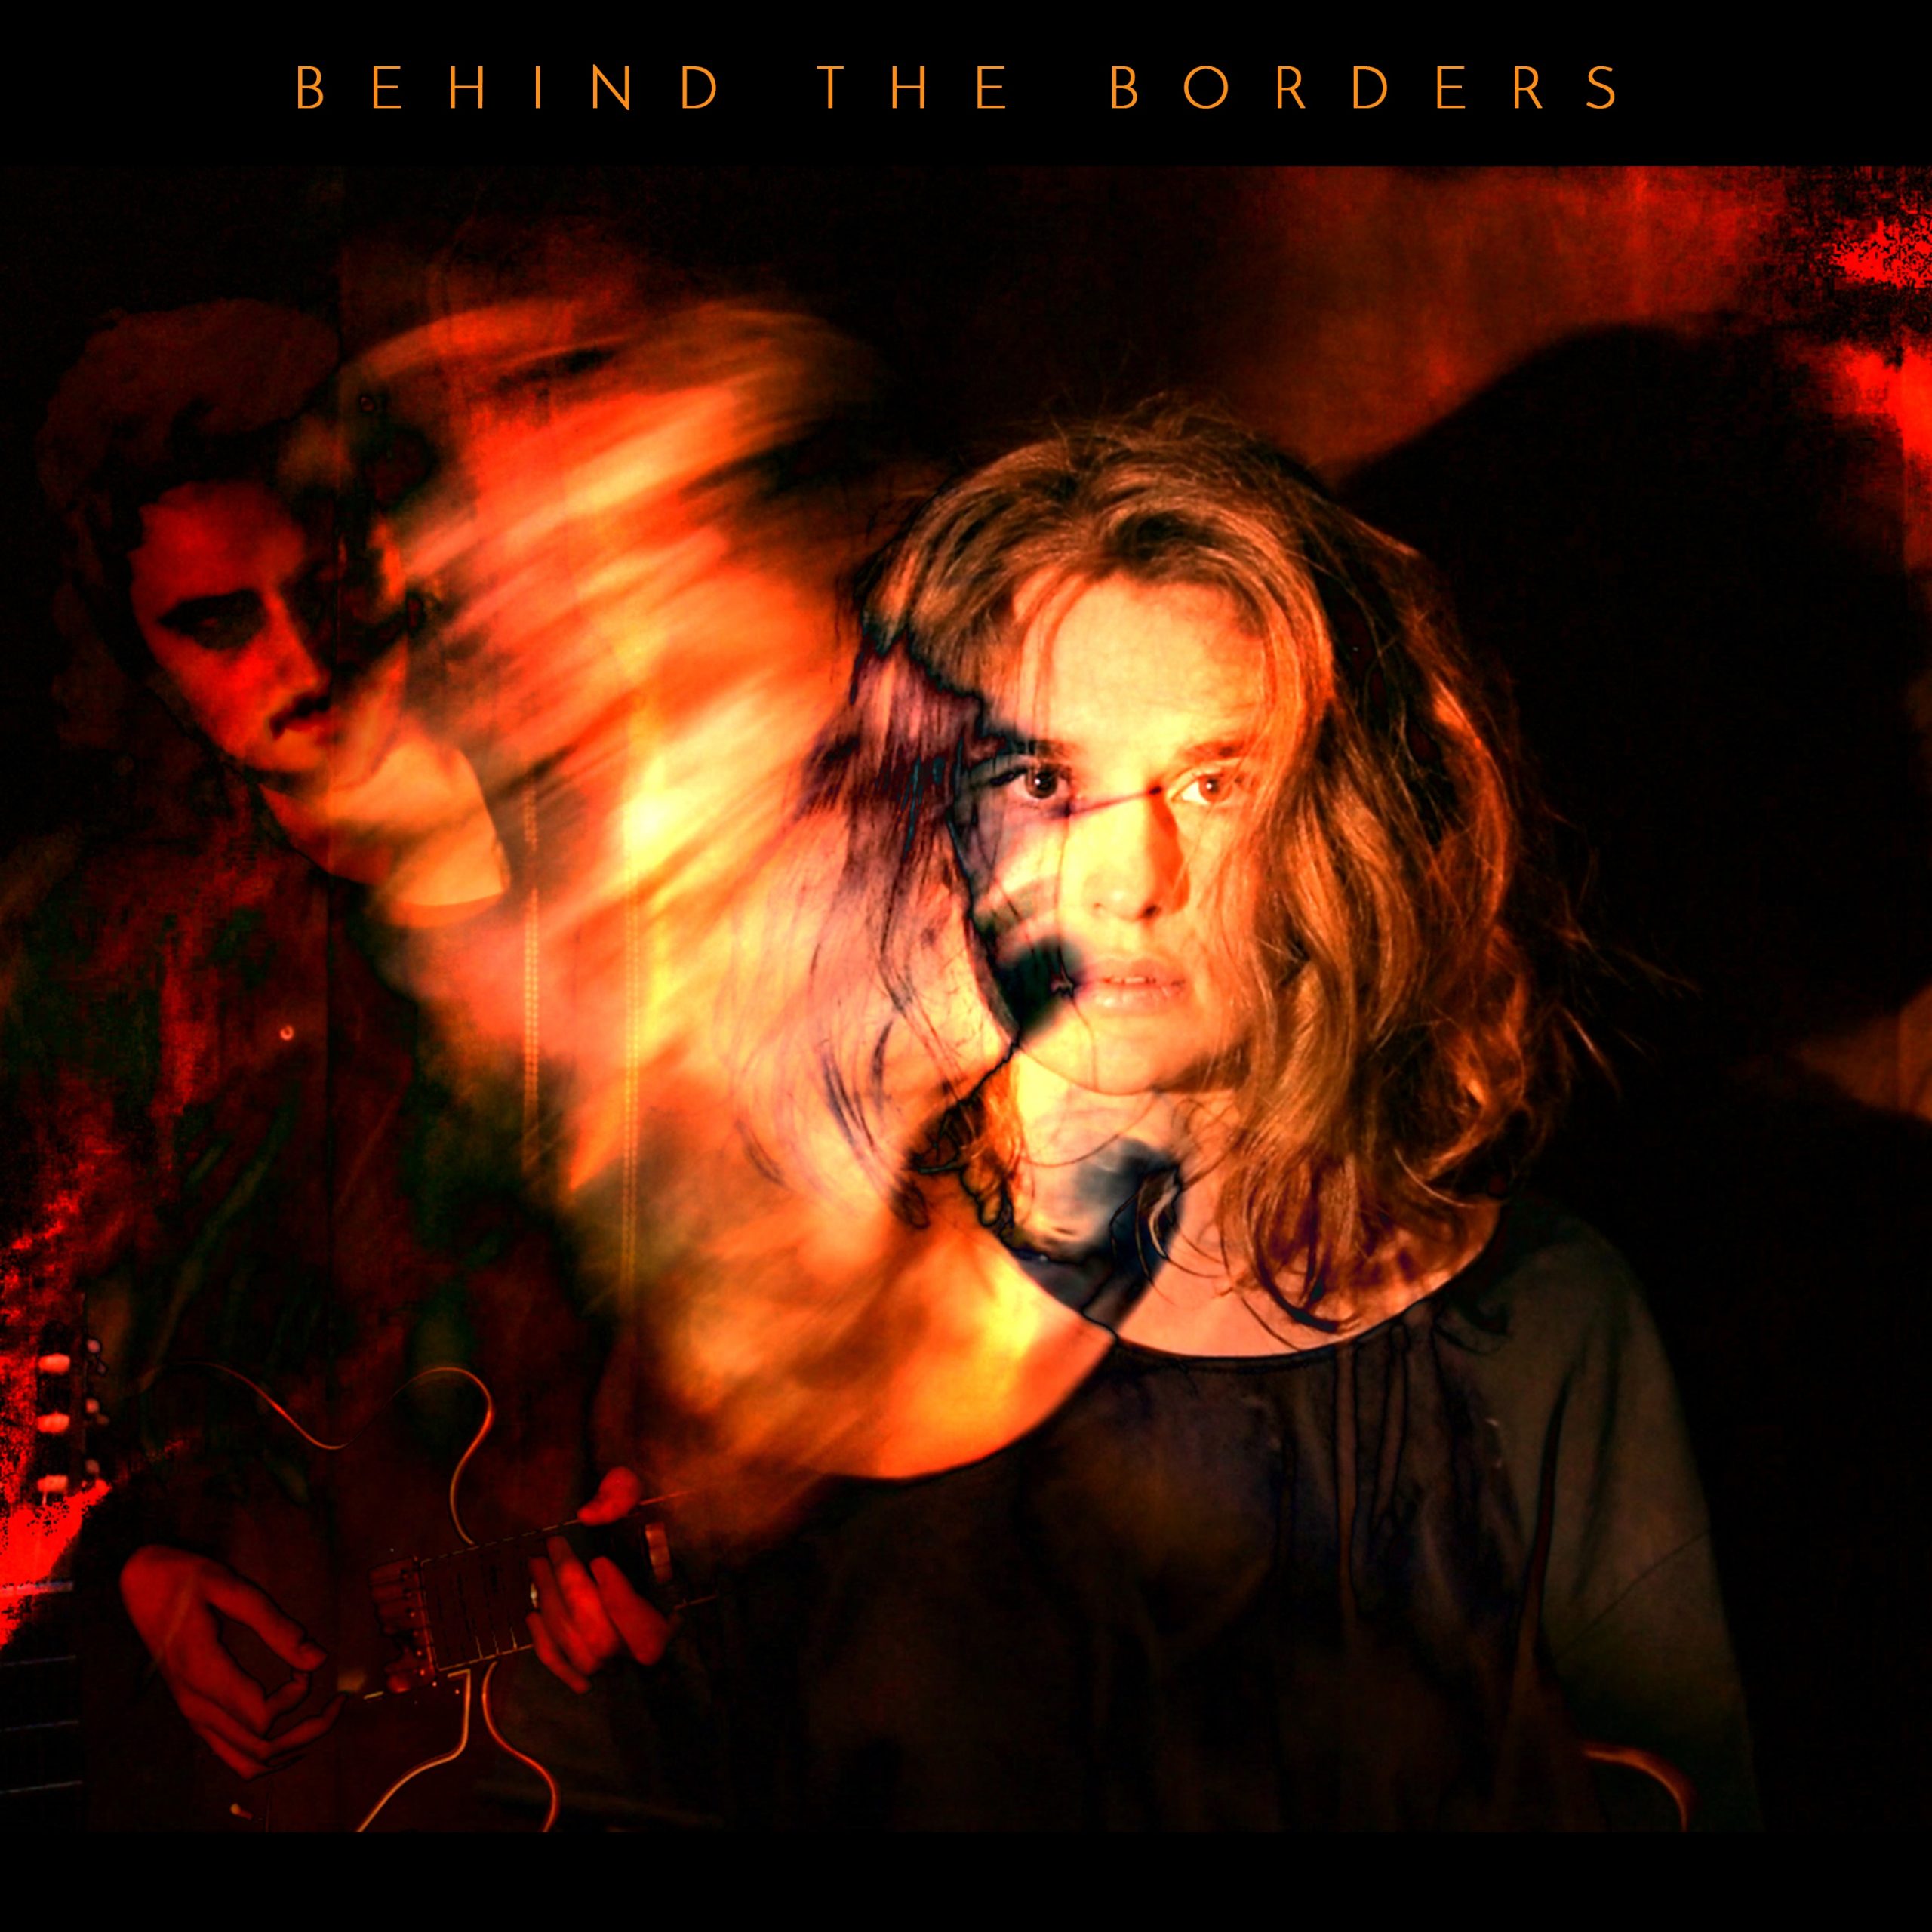 behind the borders - rowann - netherlands - indie - indie music - indie pop - indie rock - indie folk - new music - music blog - wolf in a suit - wolfinasuit - wolf in a suit blog - wolf in a suit music blog